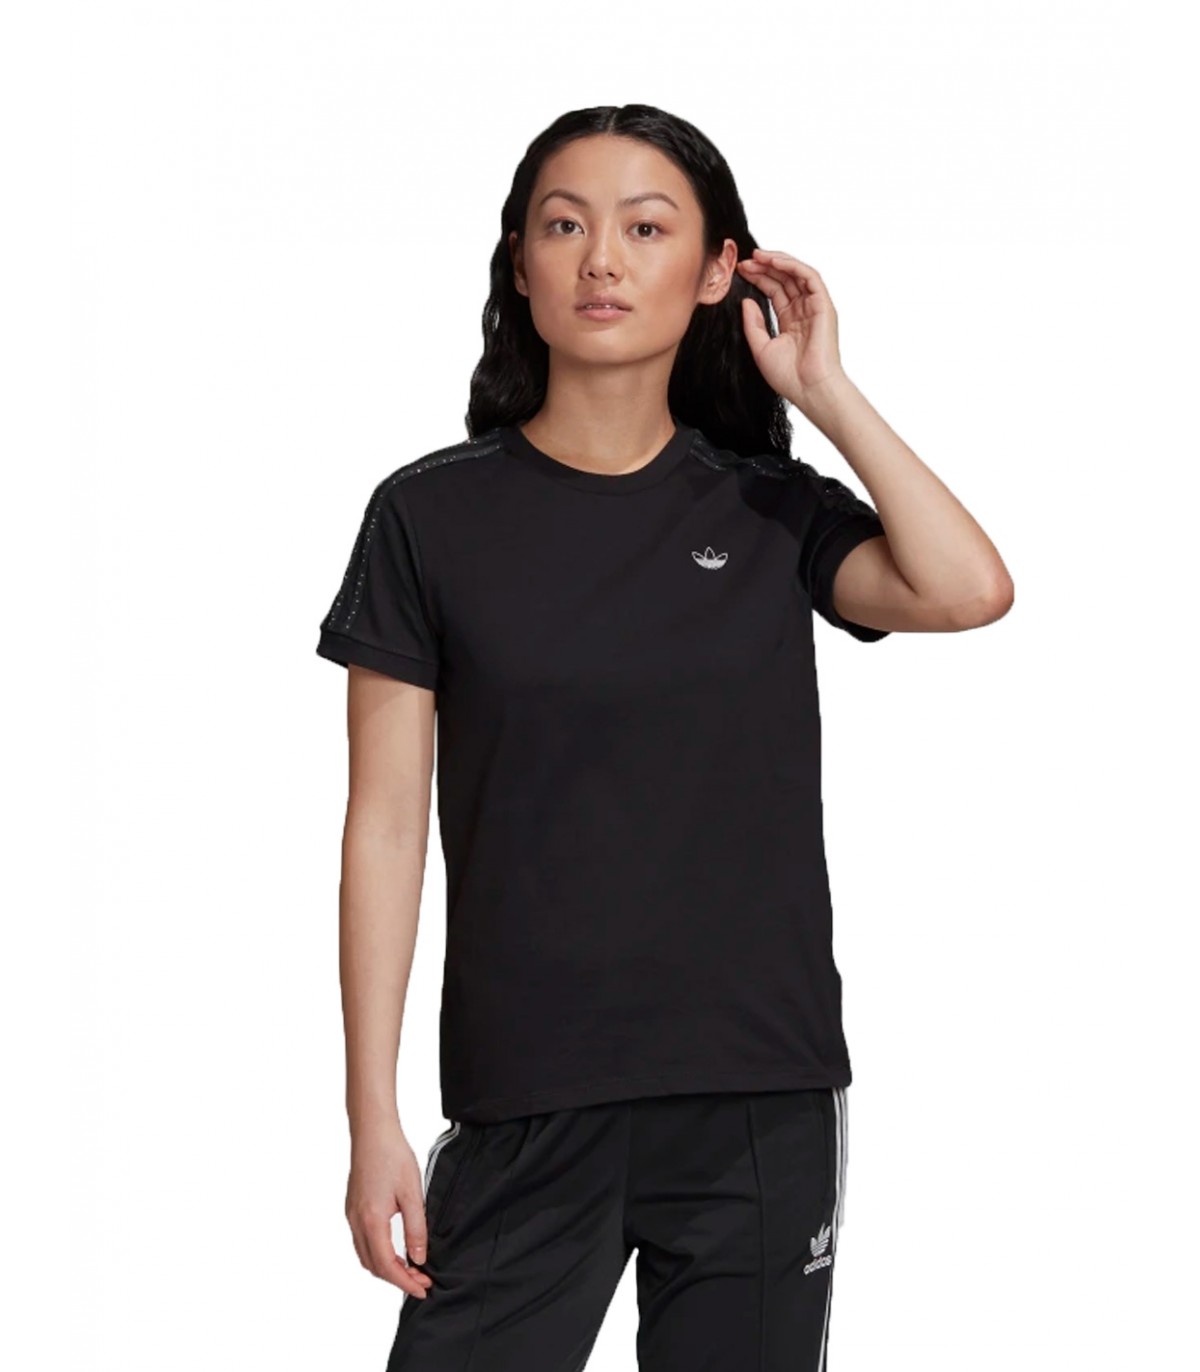 Adidas - Camiseta para Mujer Negra - Originals - Negro